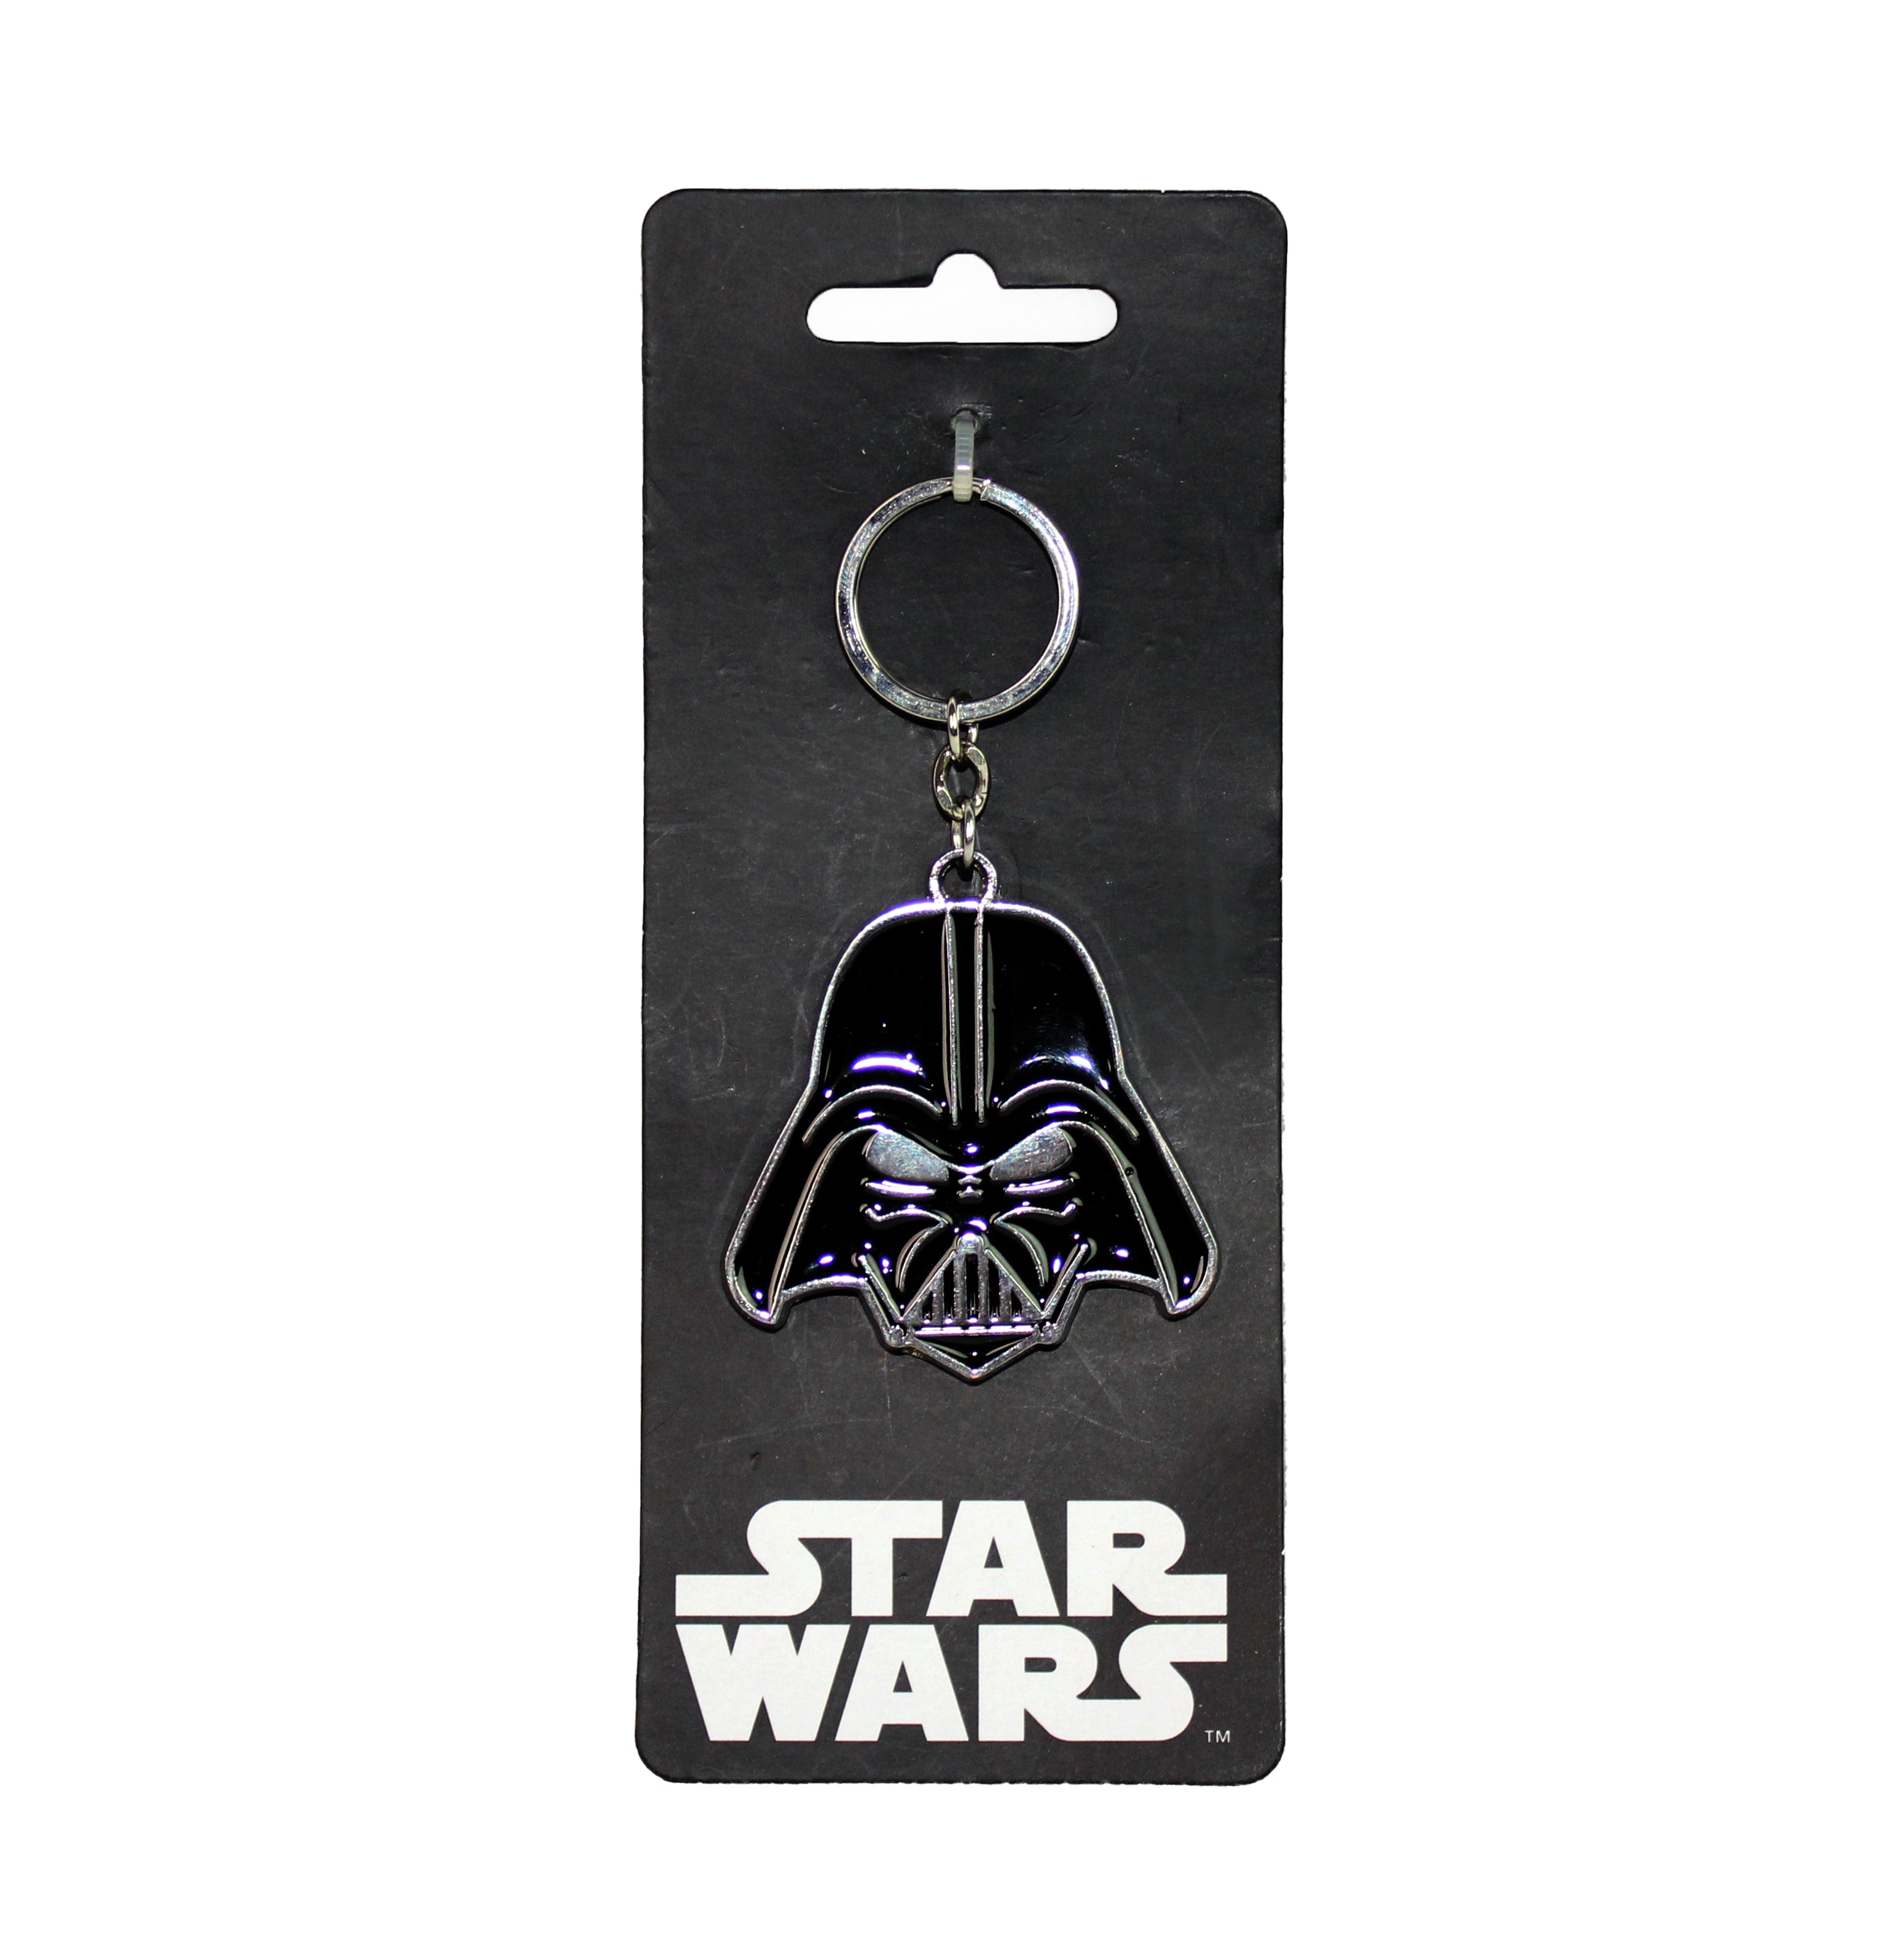 Star Wars Darth Vader Metal Enamel Helmet Keychain